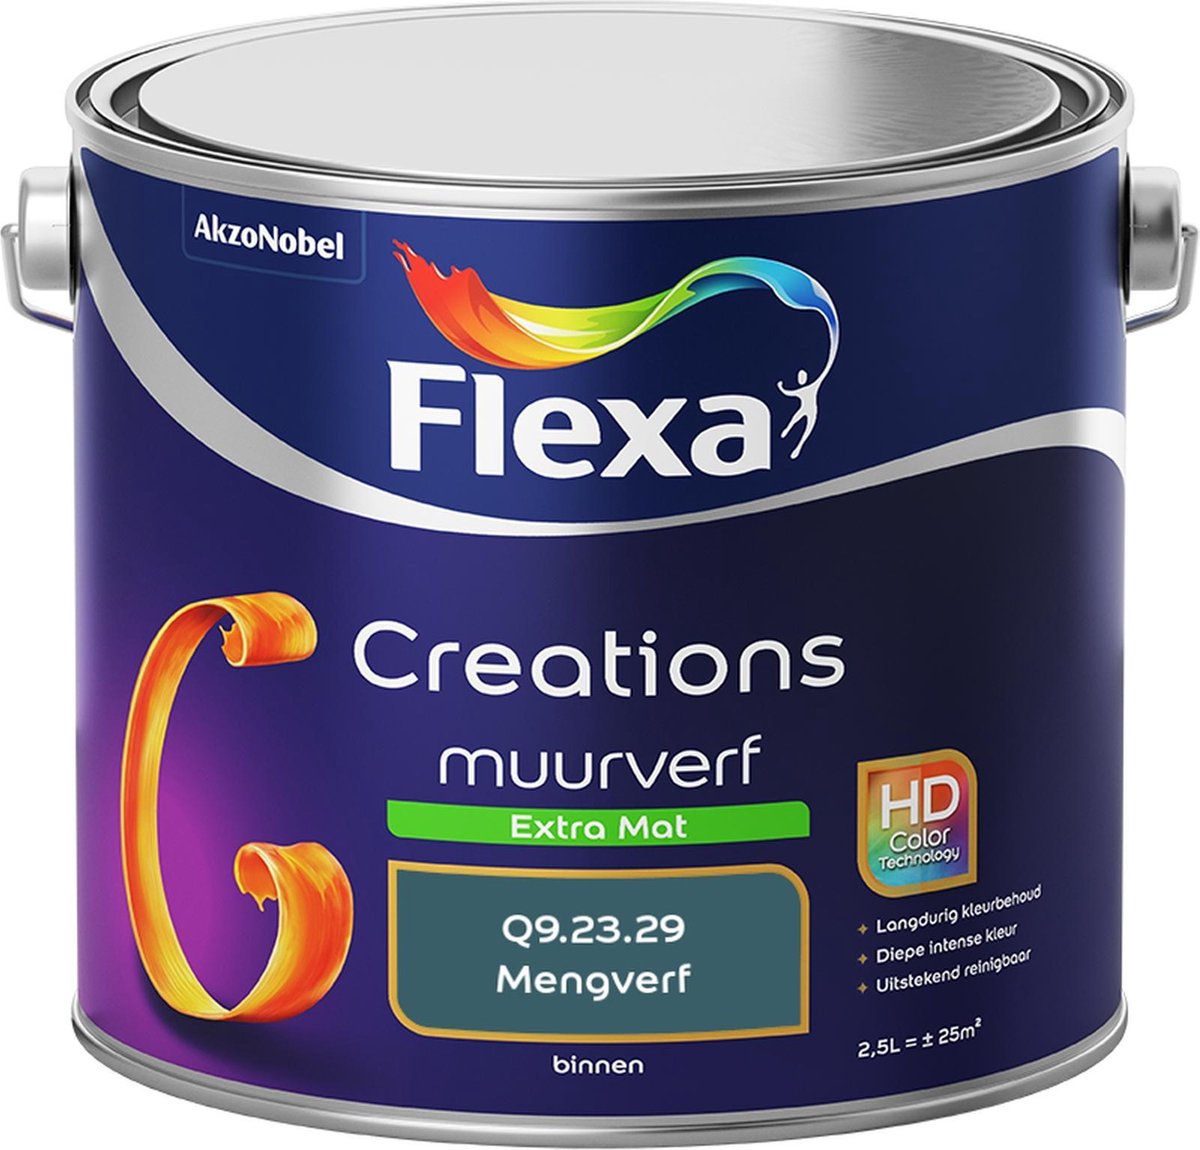 Flexa Creations Muurverf - Extra Mat - Colorfutures 2019 - Q9.23.29 - 2,5 liter